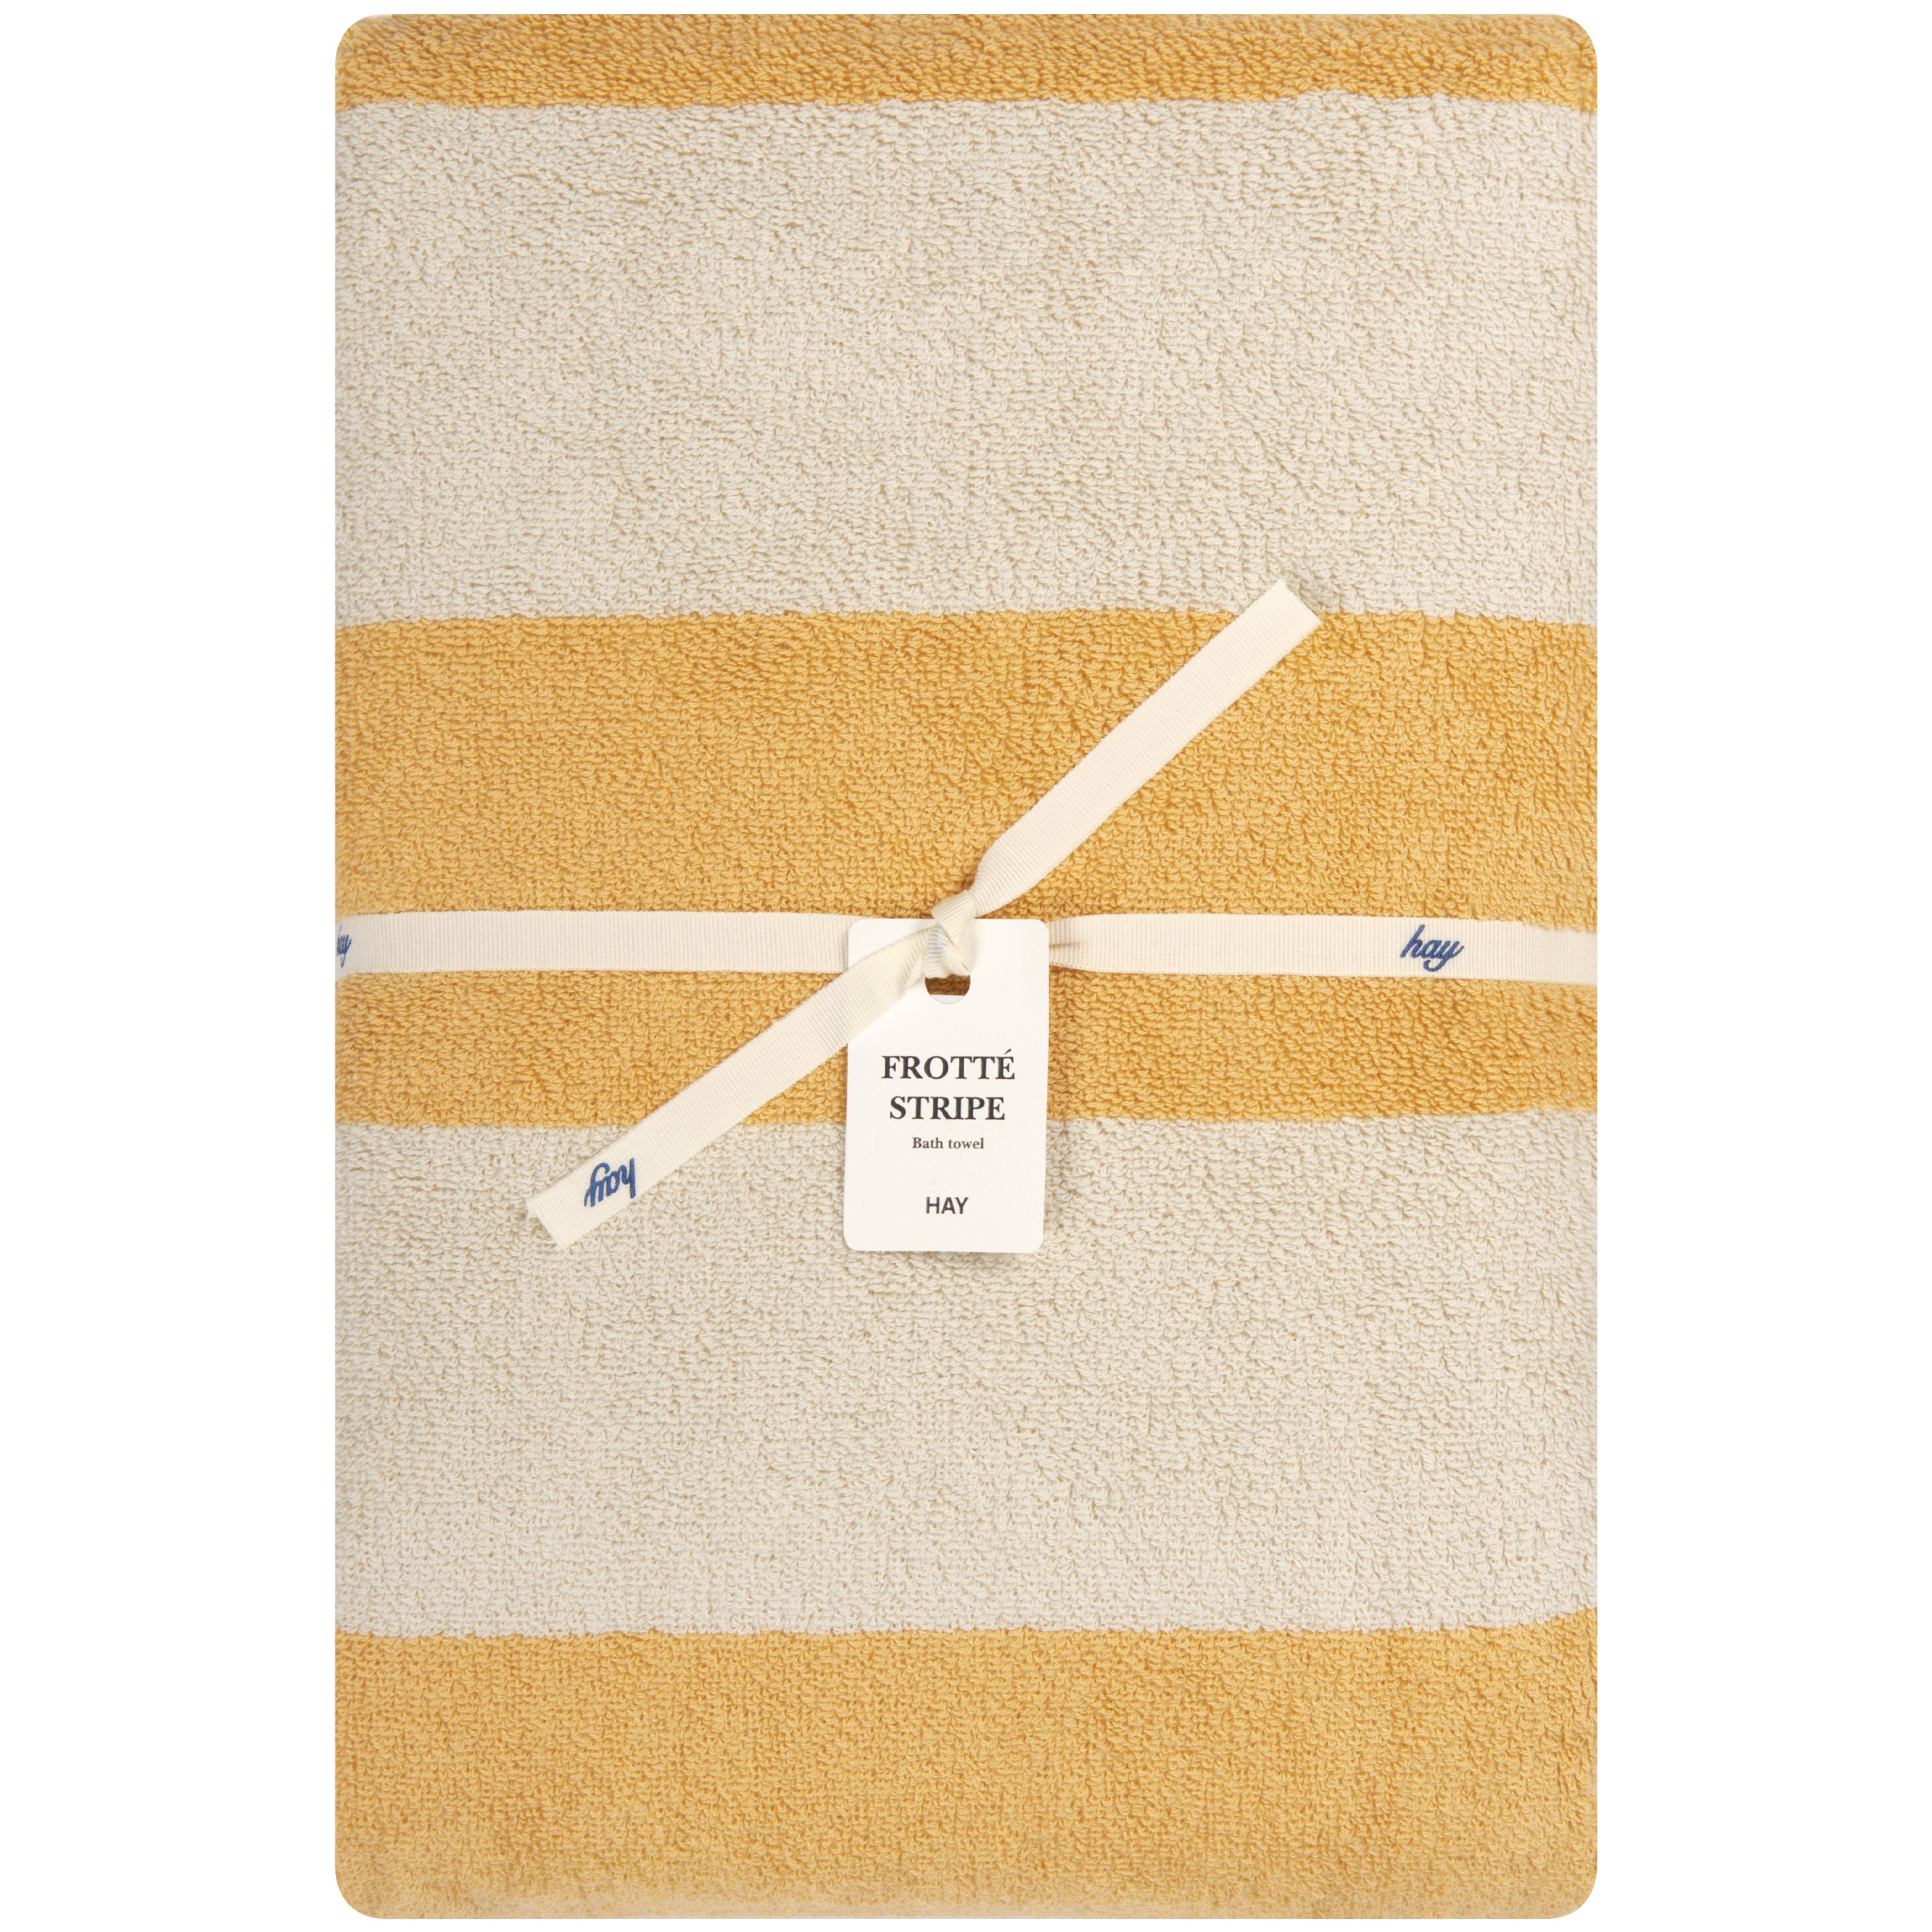 HAY ’Frotte’ Striped Bath Towel Warm Yellow